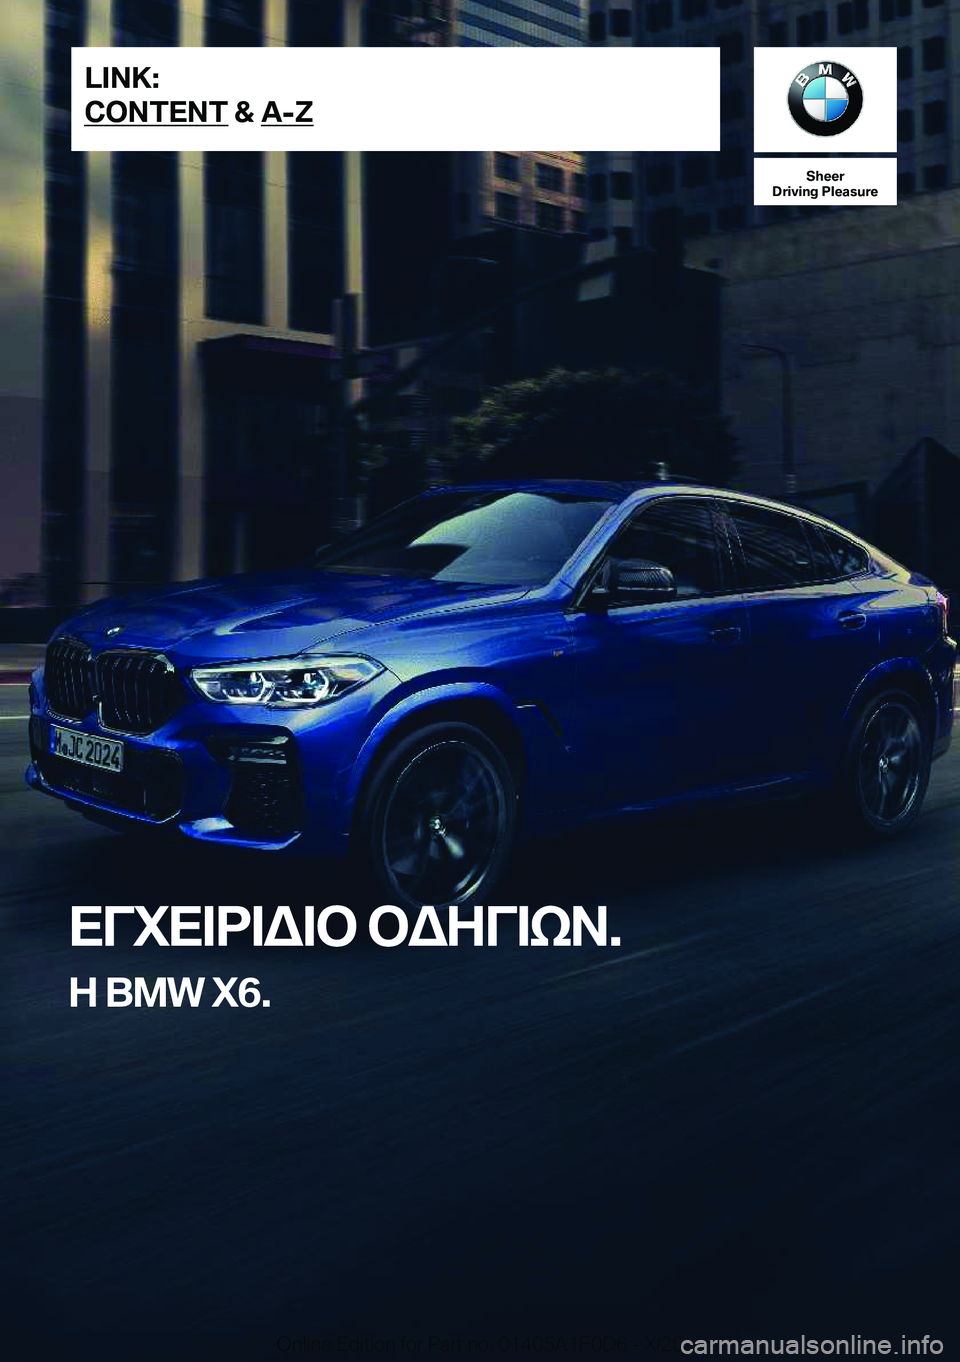 BMW X6 2021  ΟΔΗΓΌΣ ΧΡΉΣΗΣ (in Greek) �S�h�e�e�r
�D�r�i�v�i�n�g��P�l�e�a�s�u�r�e
XViX=d=W=b�bWZV=kA�.
Z��B�M�W��X�6�.�L�I�N�K�:
�C�O�N�T�E�N�T��&��A�-�Z�O�n�l�i�n�e��E�d�i�t�i�o�n��f�o�r��P�a�r�t��n�o�.��0�1�4